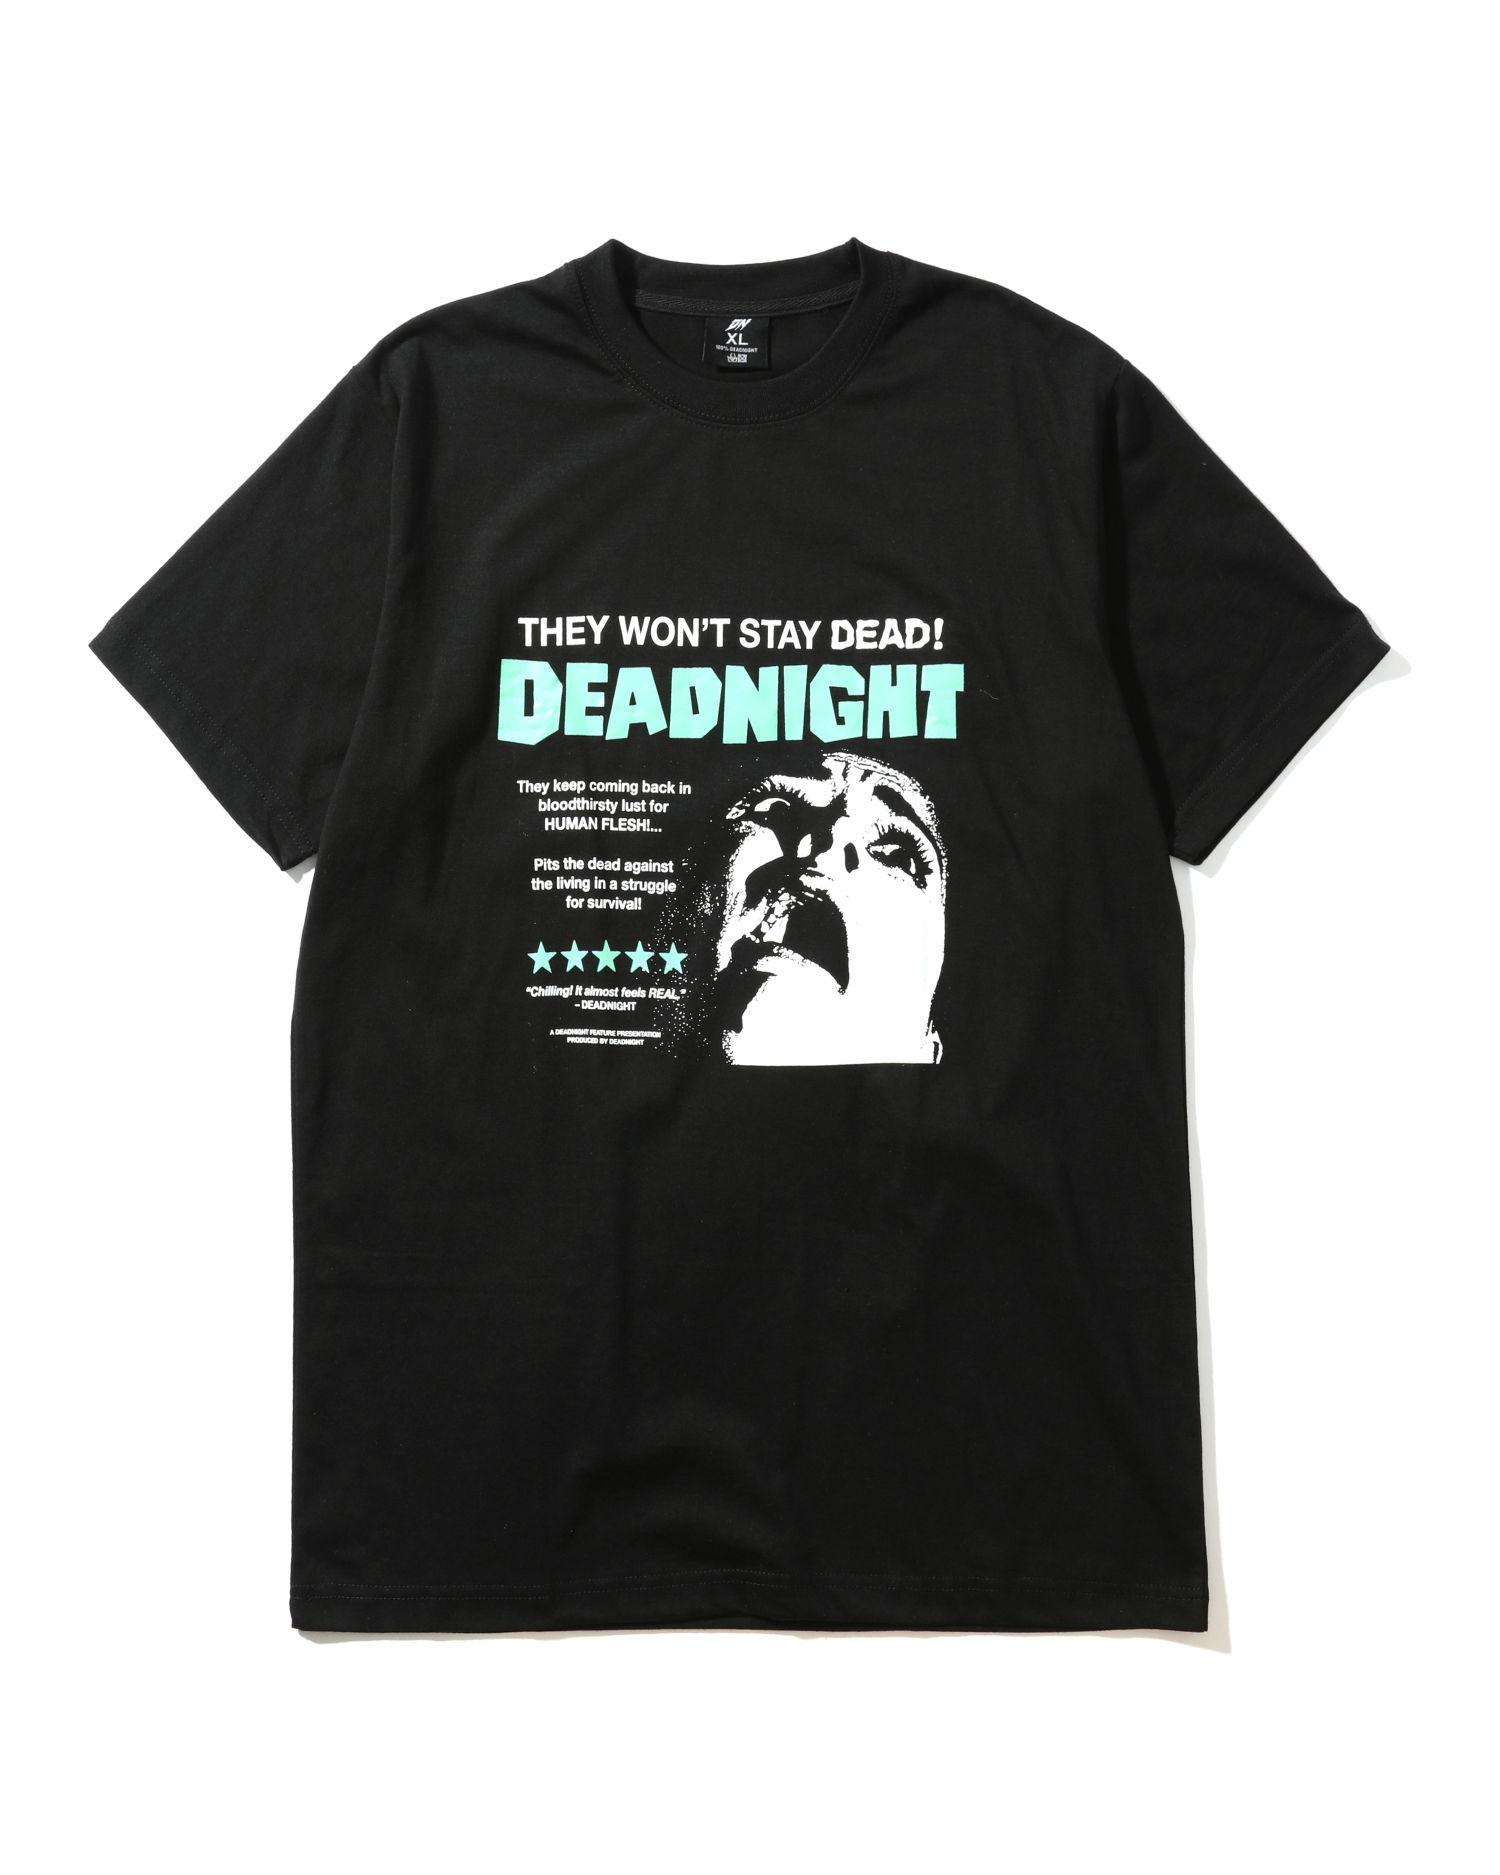 "Deadnight" graphic print T-shirt by DEADNIGHT